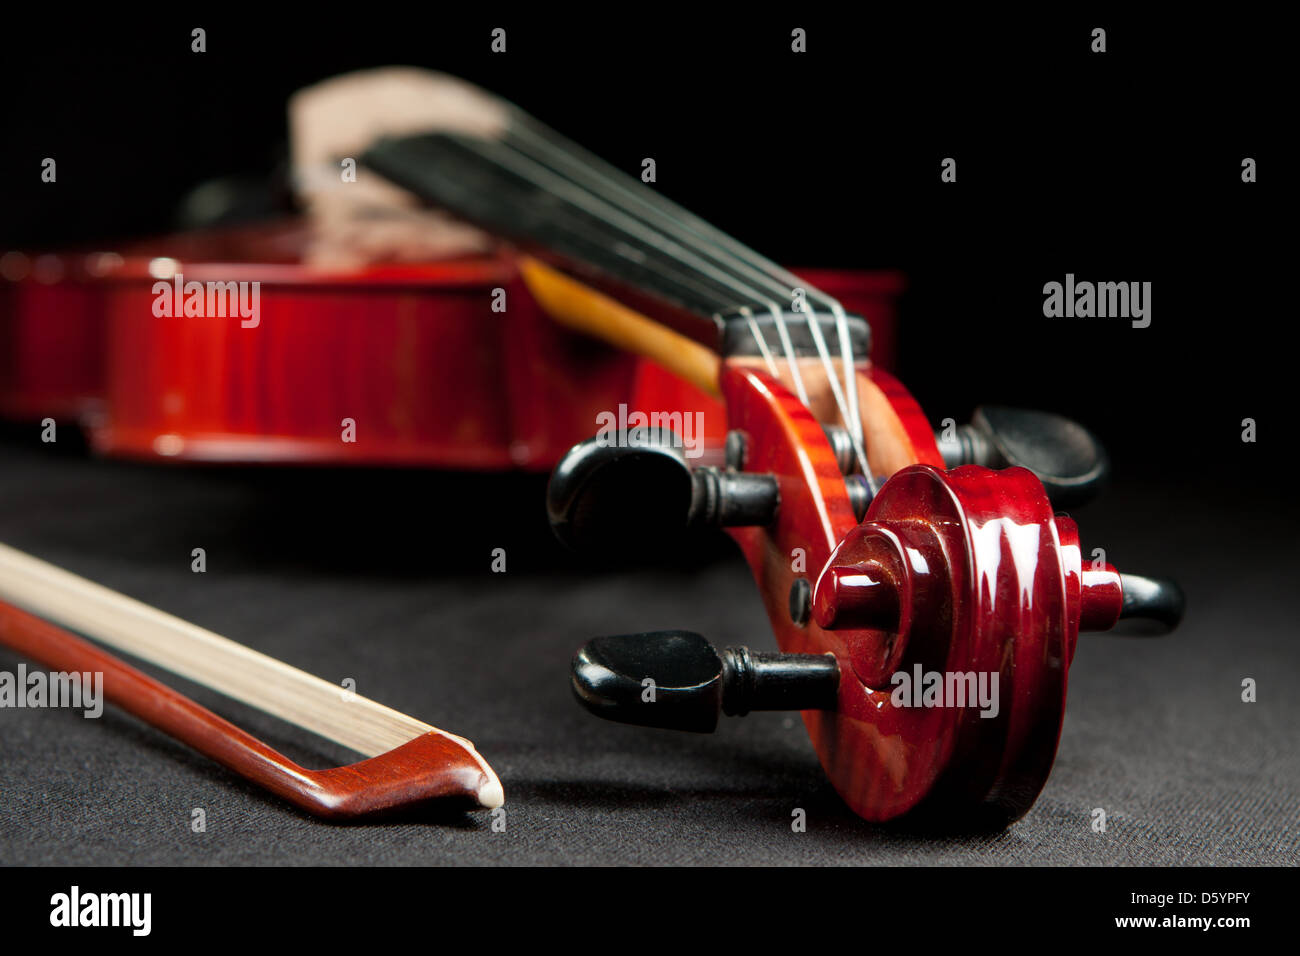 beautiful violin and bow on dark bakground Stock Photo